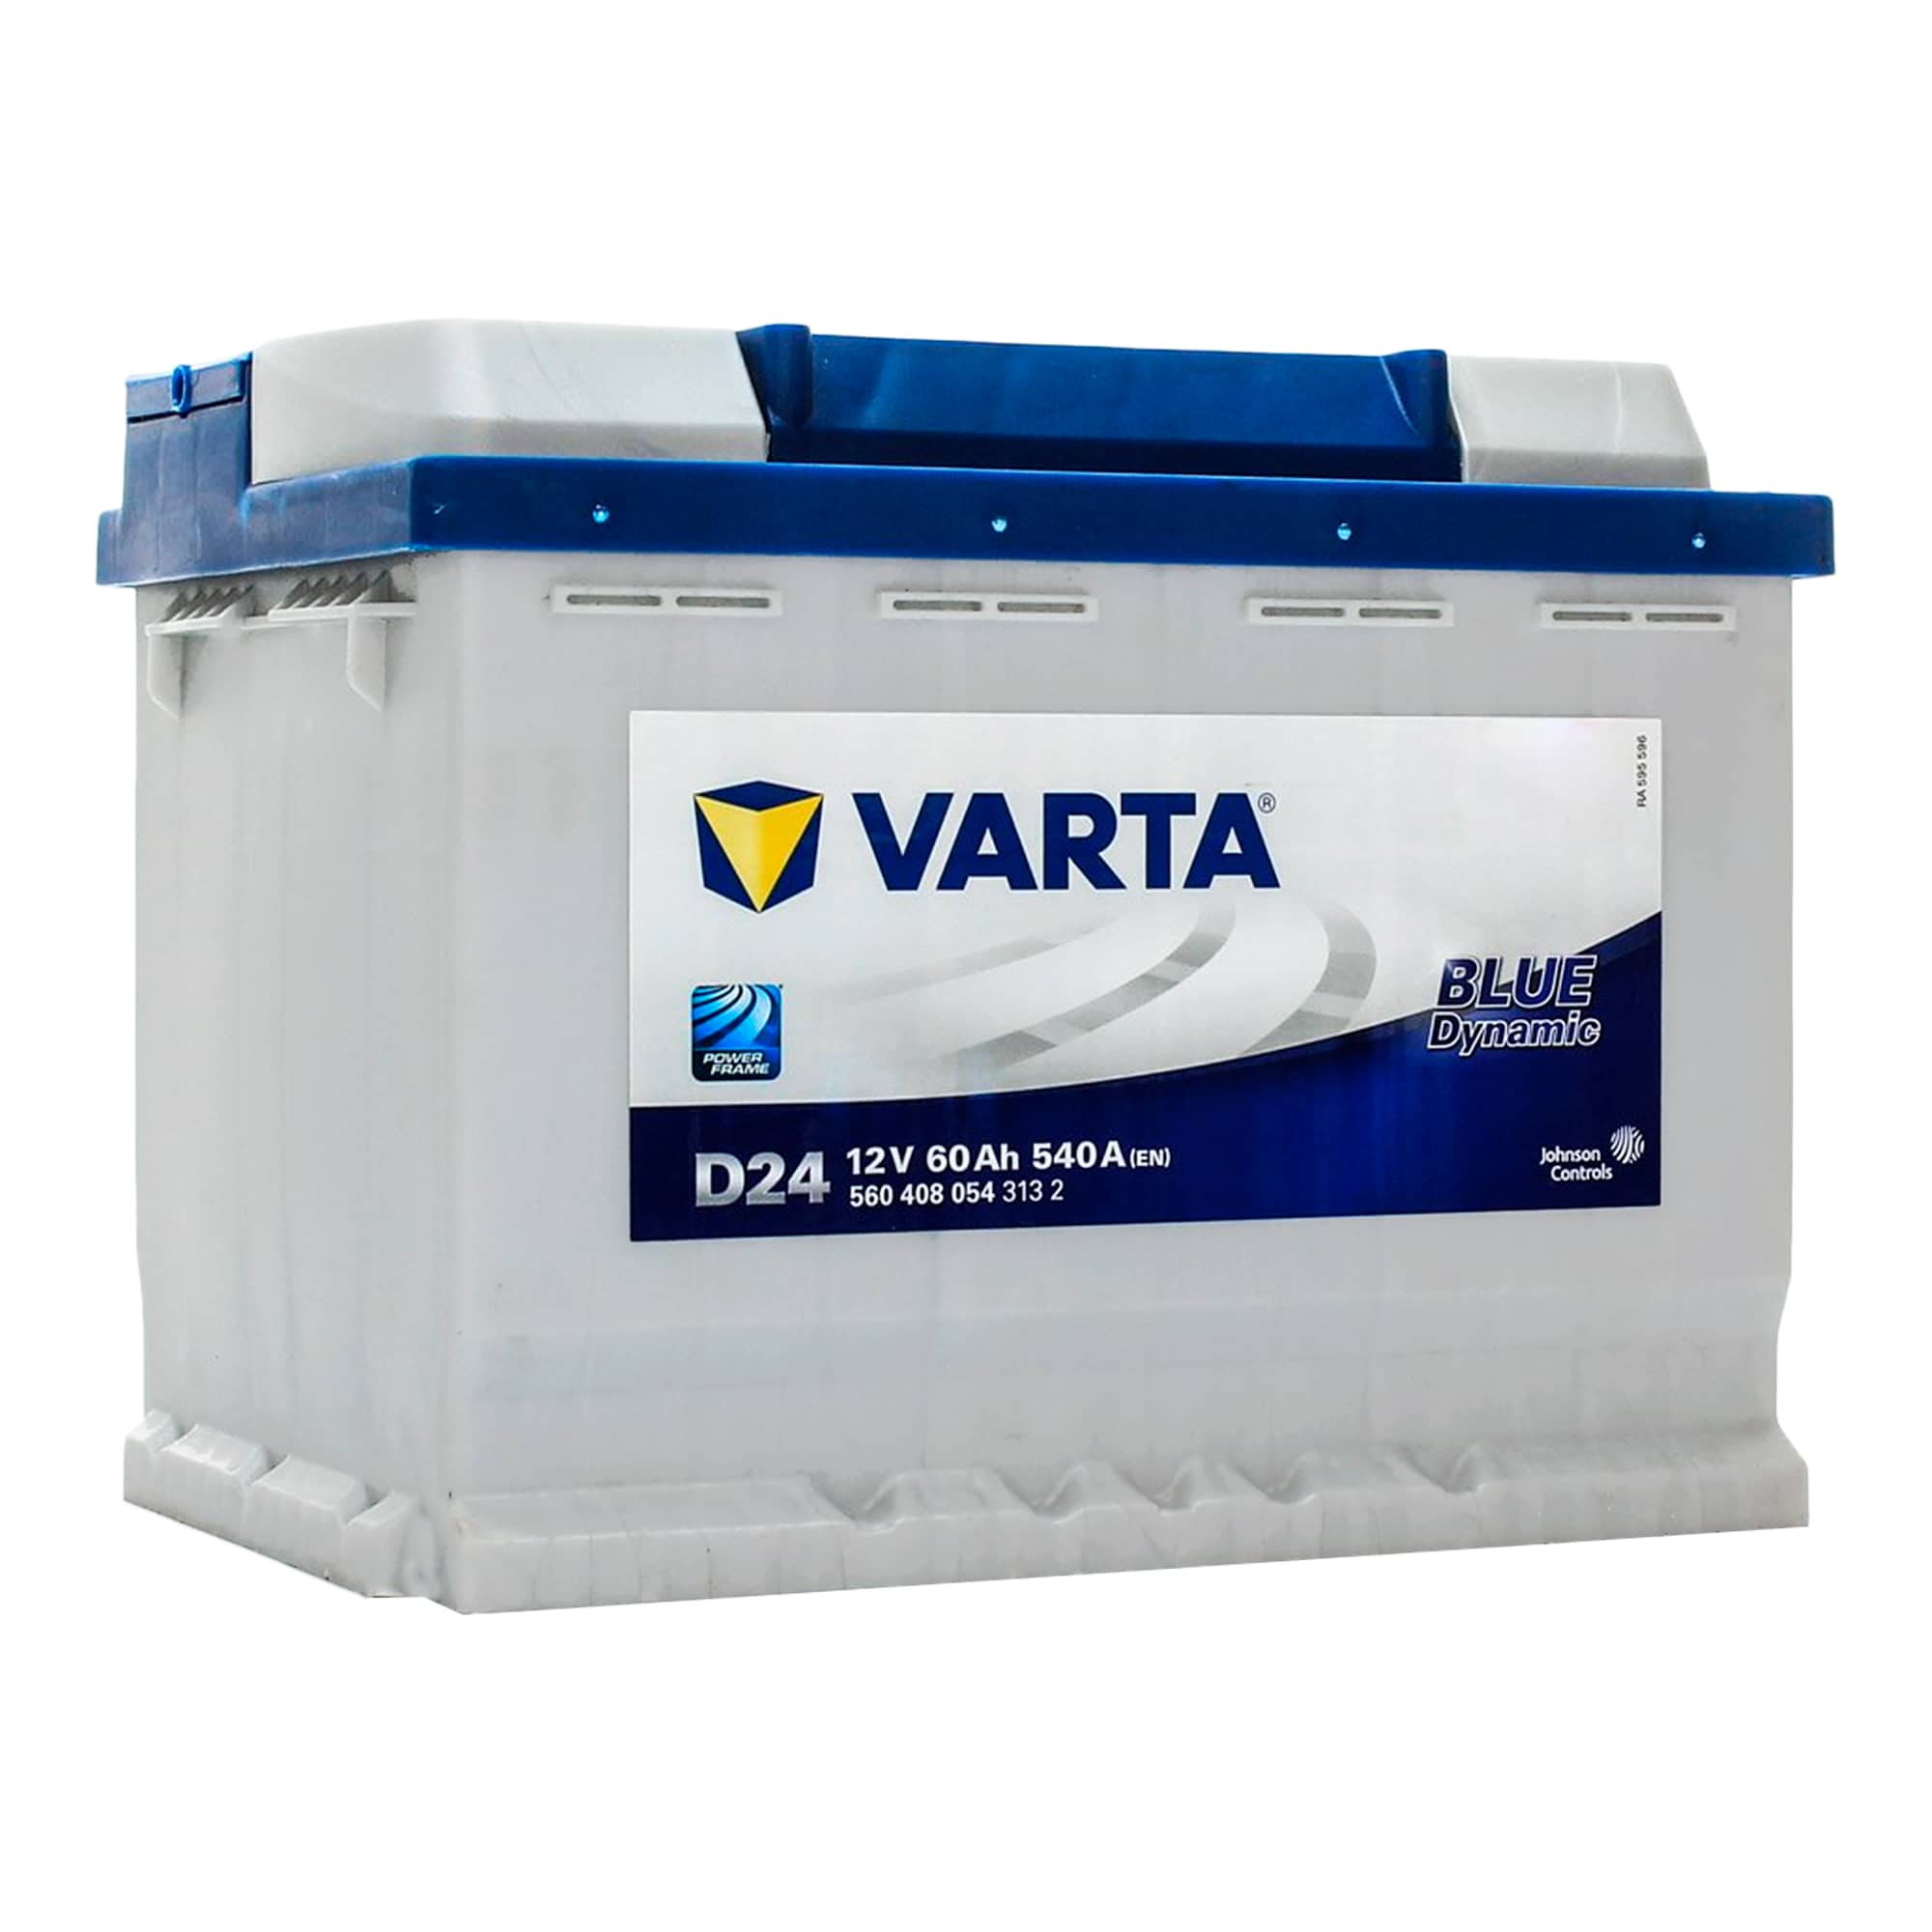 Автомобильный аккумулятор VARTA 6CT-60 АзЕ 560 408 054 Blue Dynamic (D24)